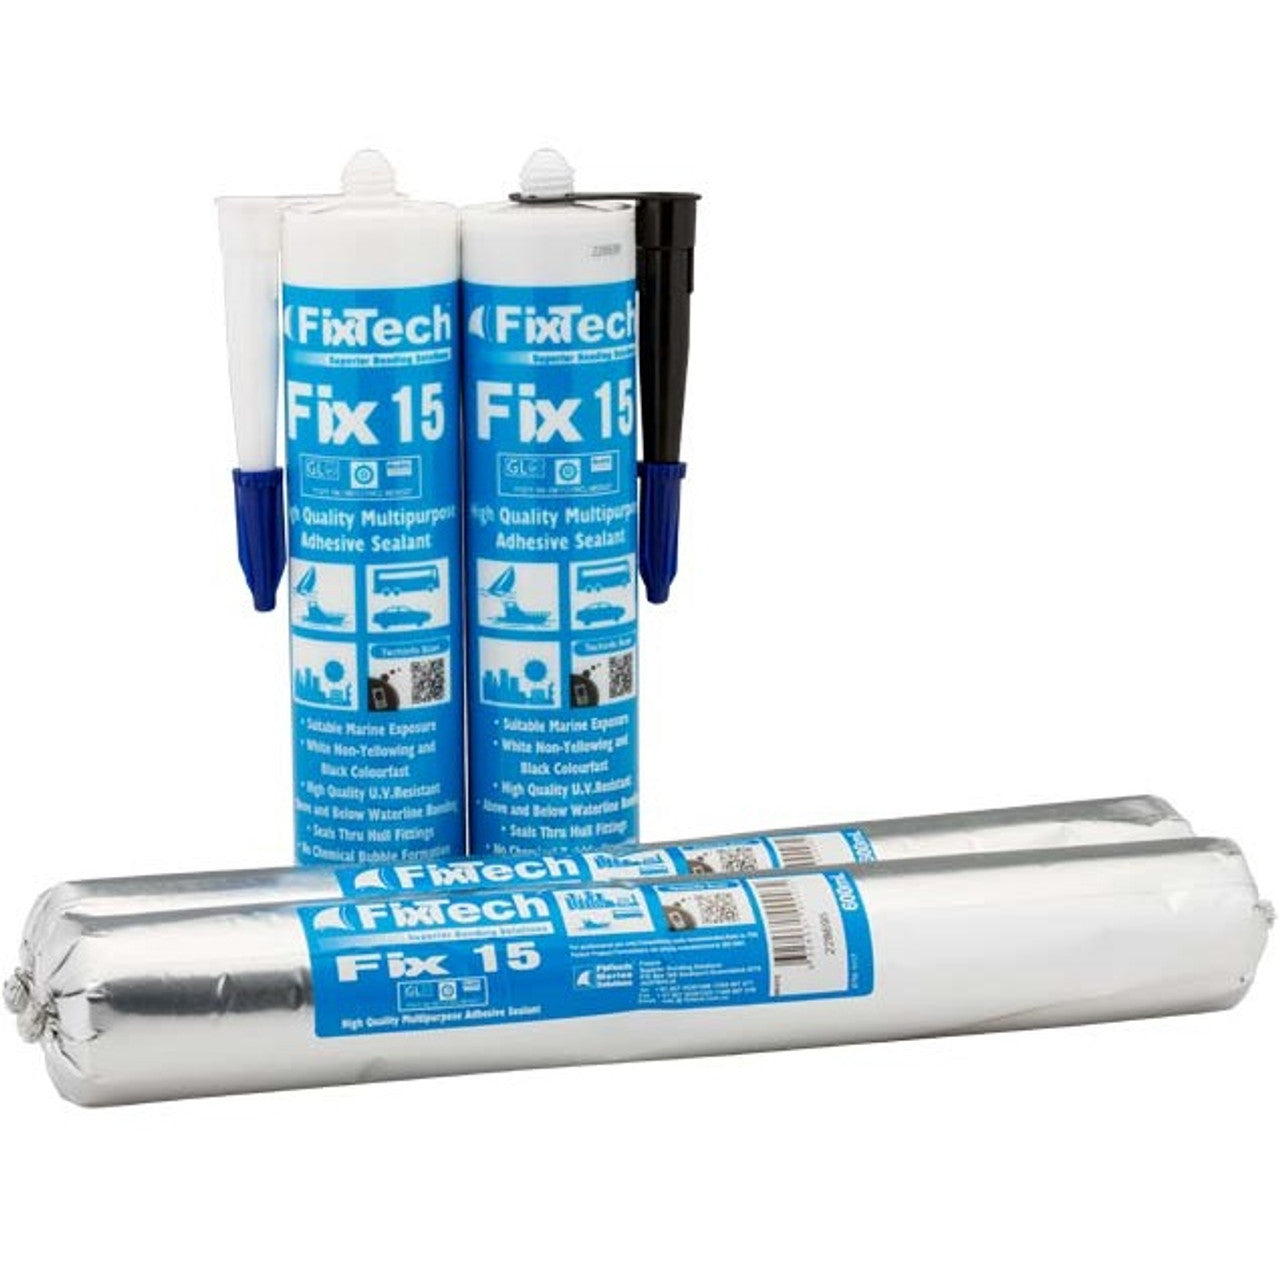 Fix15 Multi-purpose Adhesive Sealants